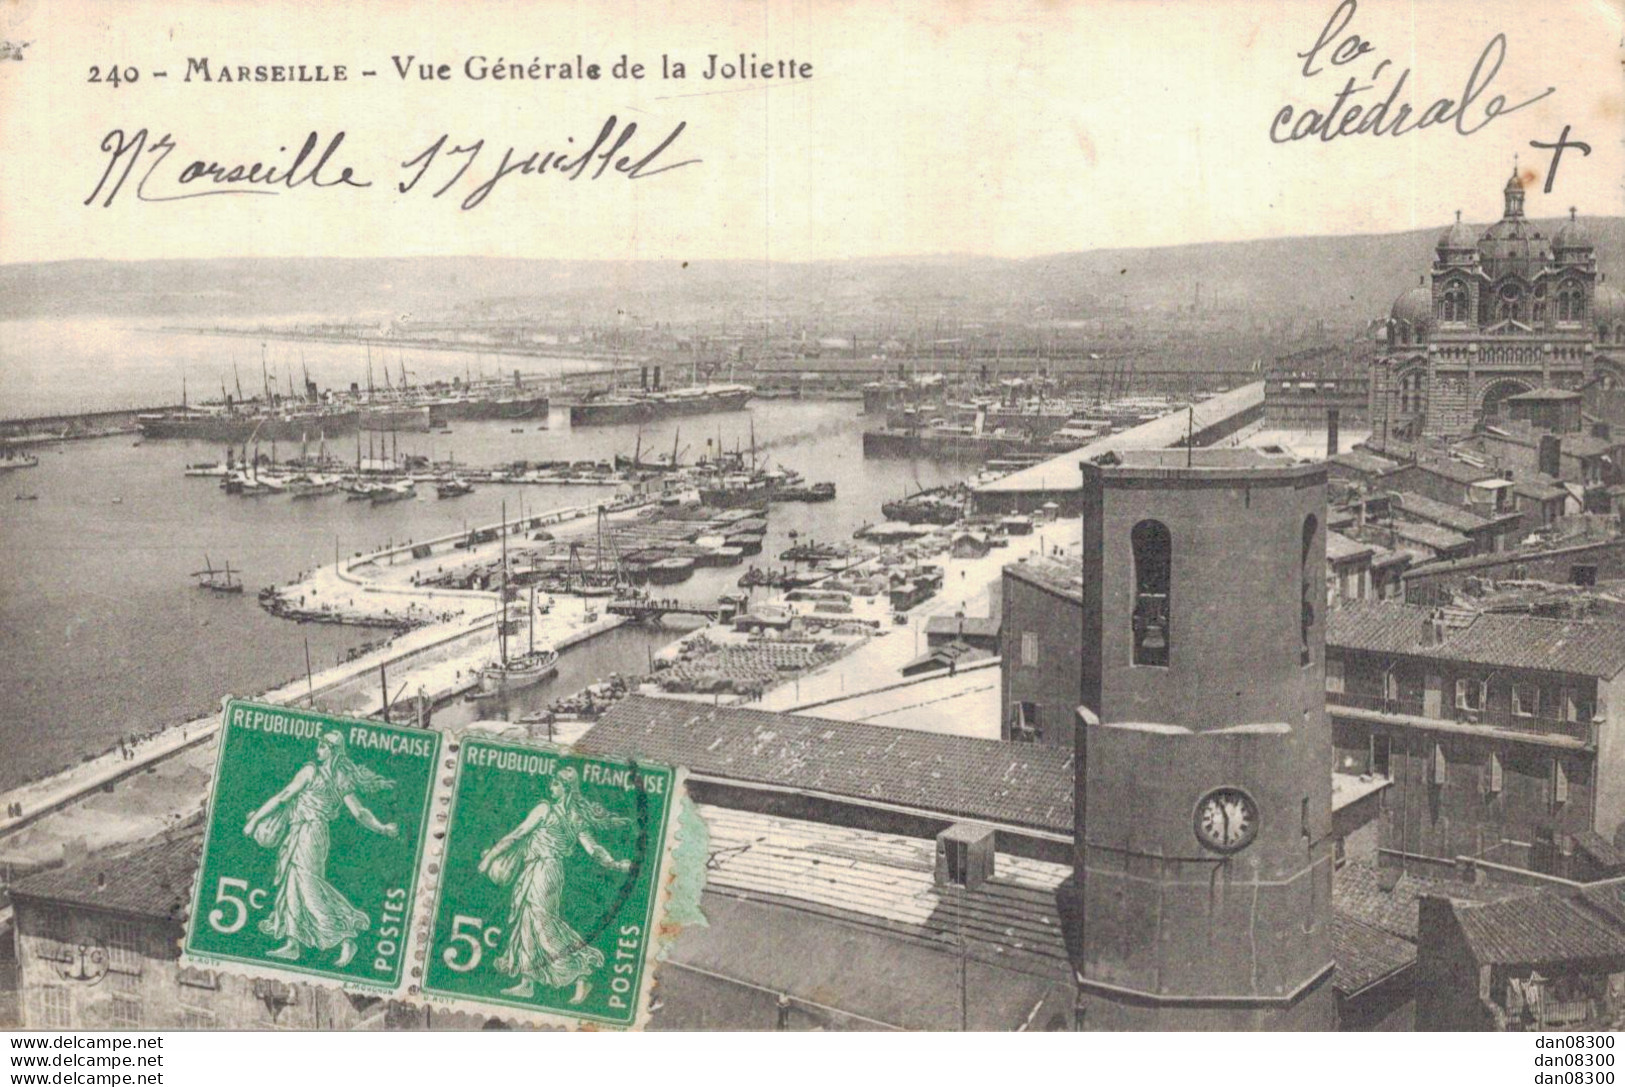 13 MARSEILLE VUE GENERALE DE LA JOLIETTE - Joliette, Port Area